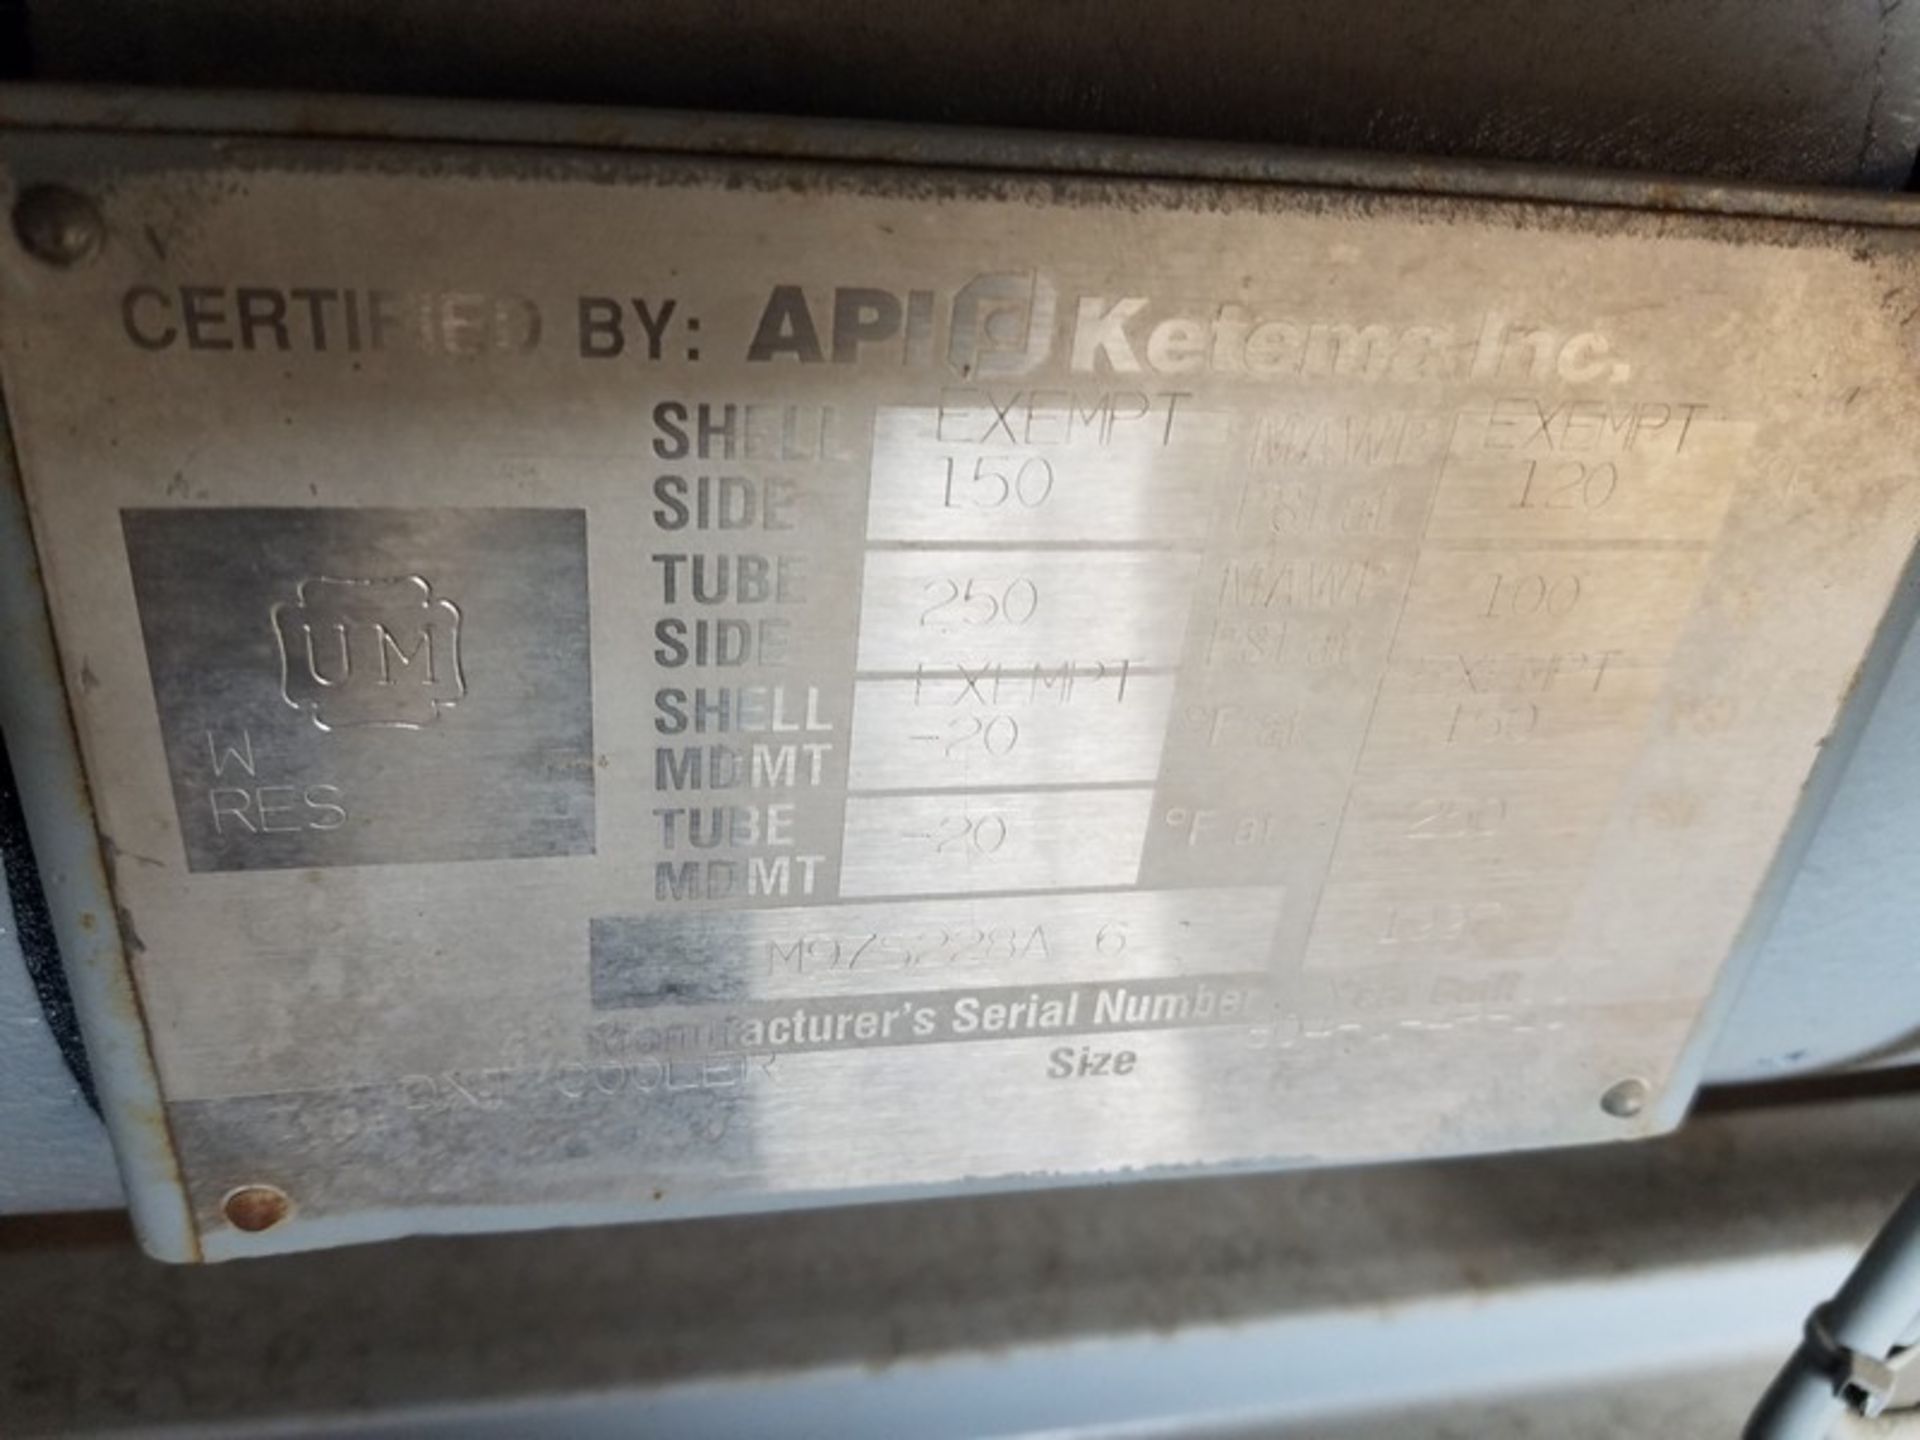 API Ketema DXL Heat exchange, serial # M975228A-6, RAE P33AOCS9-SP cooler, serial # 2-98-F44007-1, - Image 5 of 9